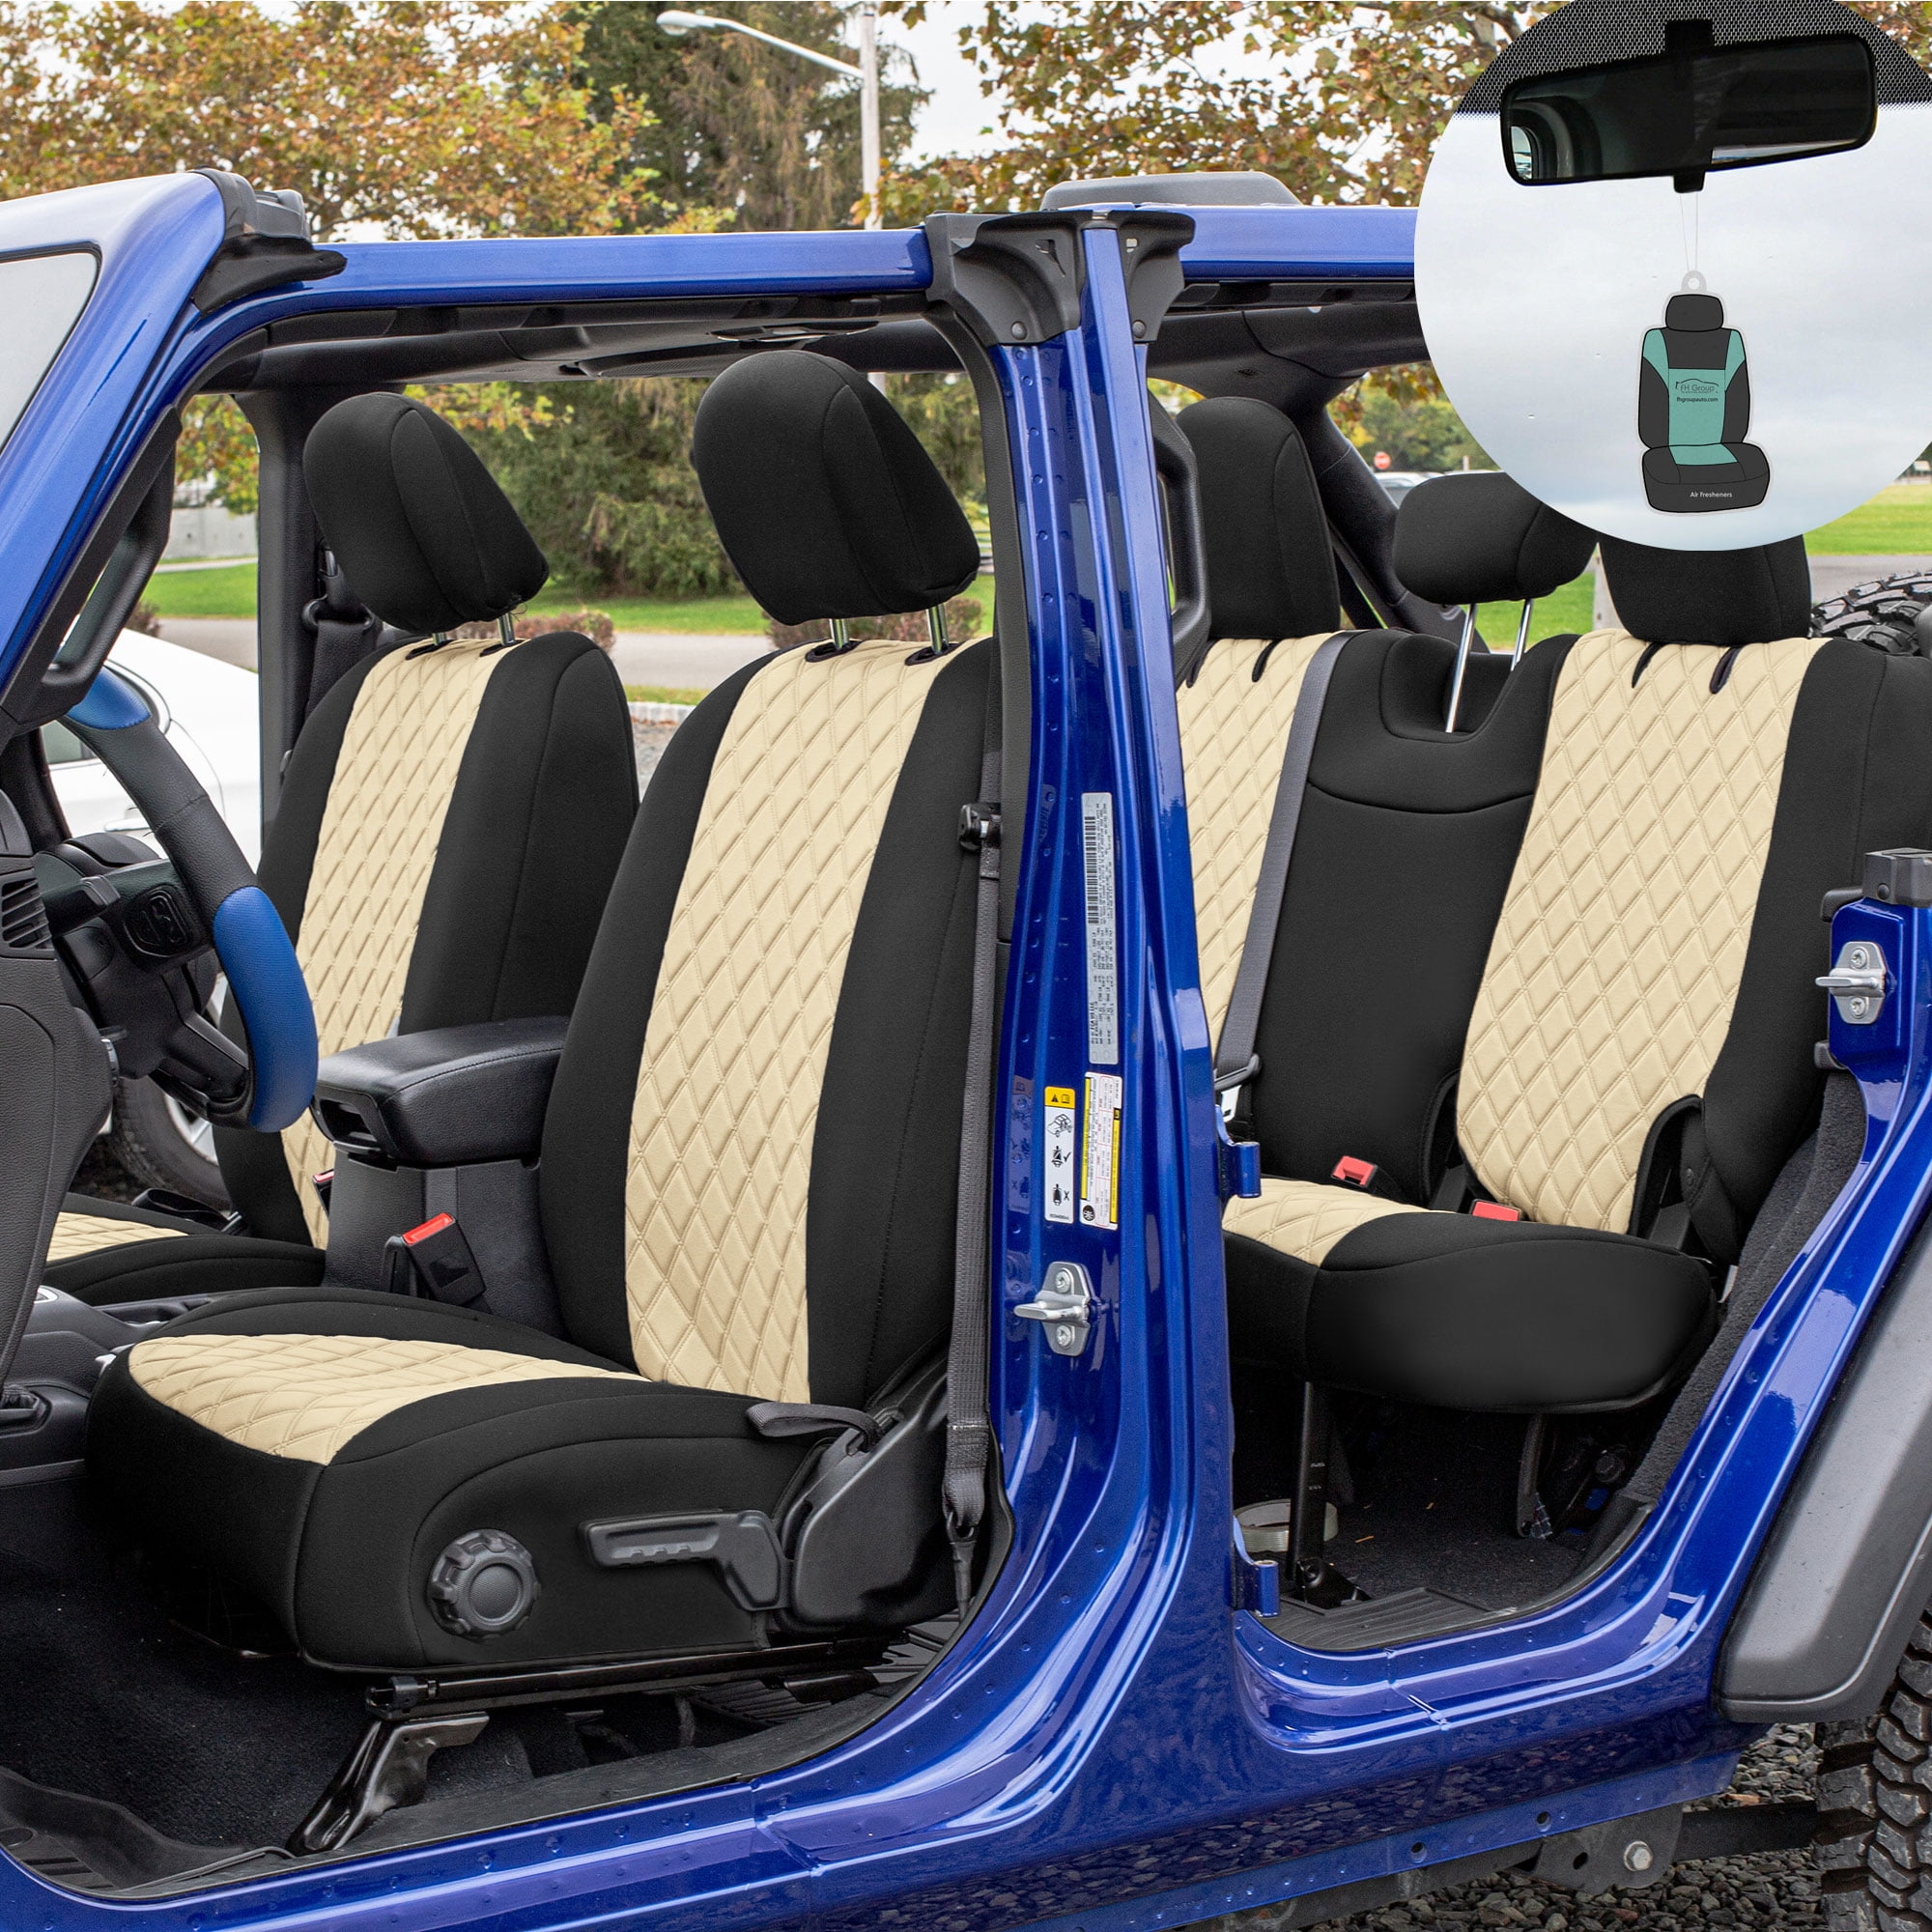 AOMSAZTO Car Seat Cover Fit for Hyundai Kona 2018 2019 2020 2021